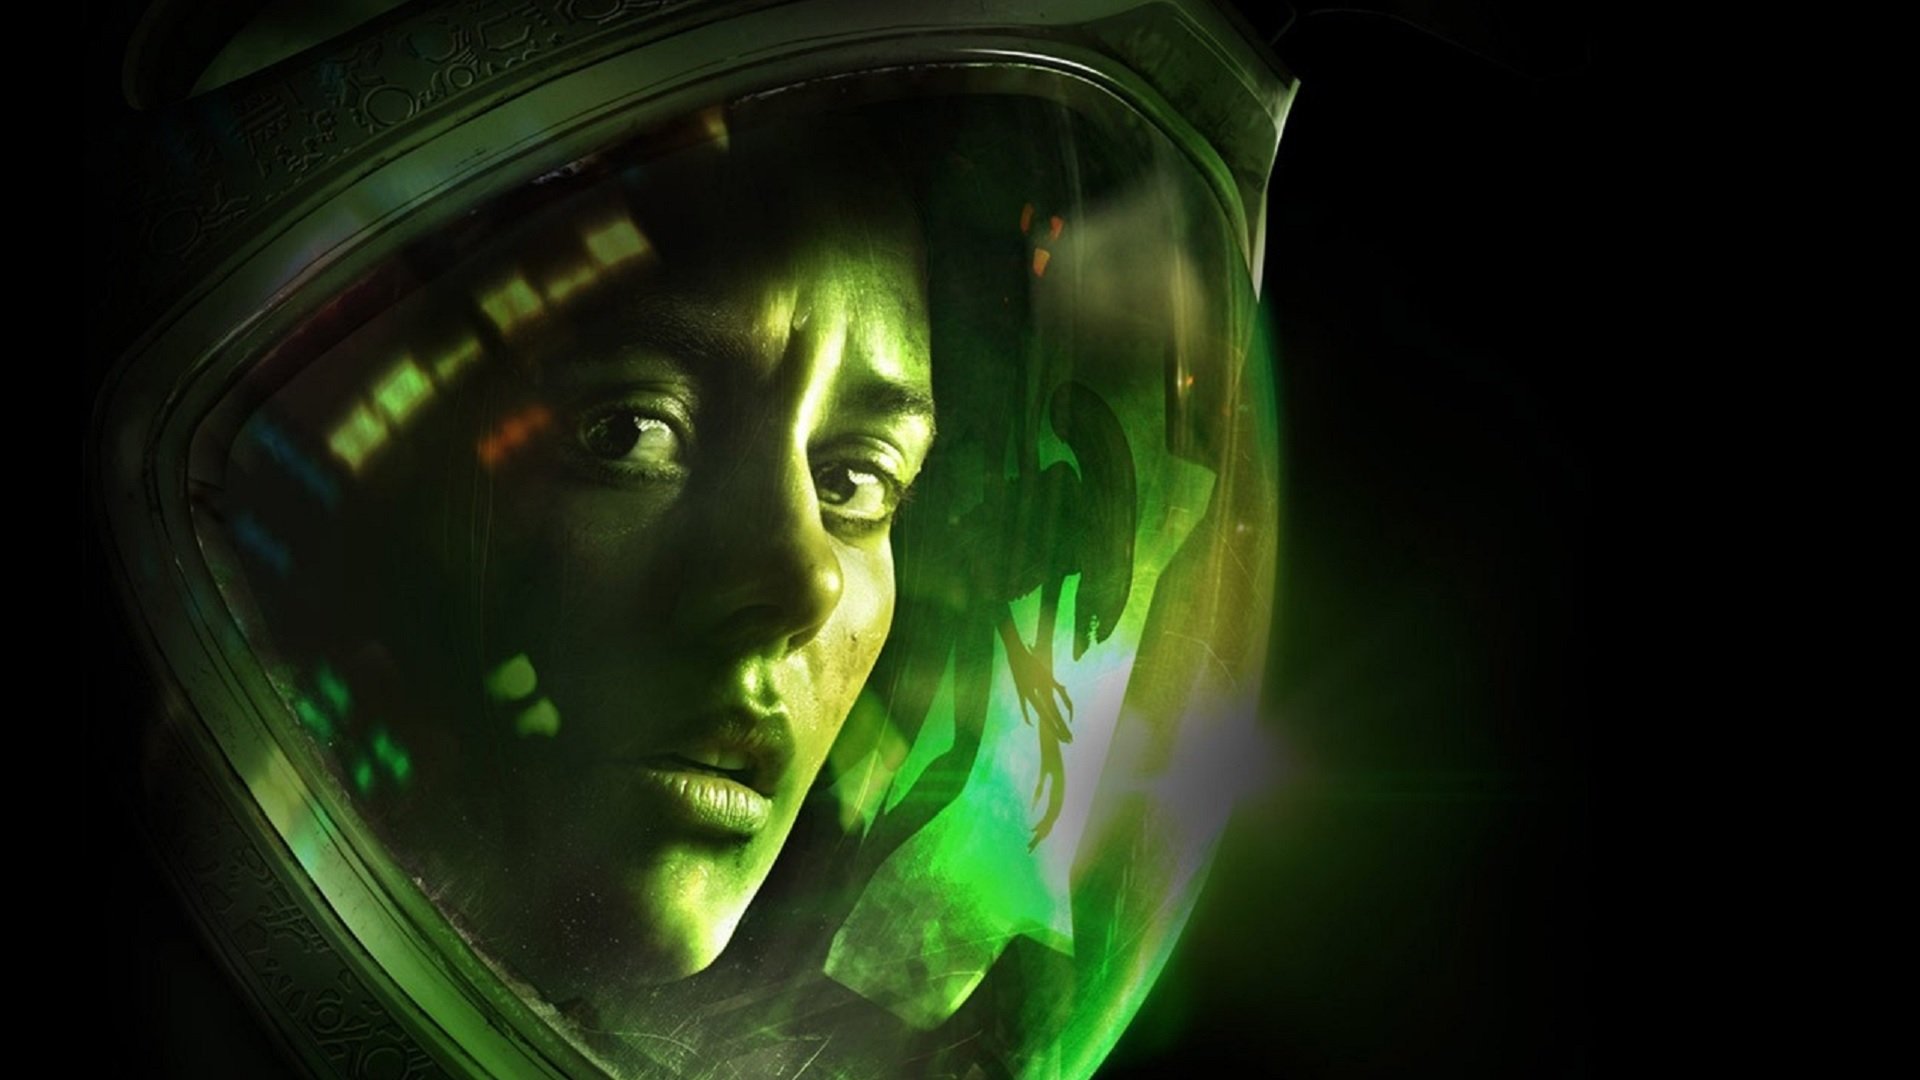 Horror Alien: Isolation will appear on mobile platforms